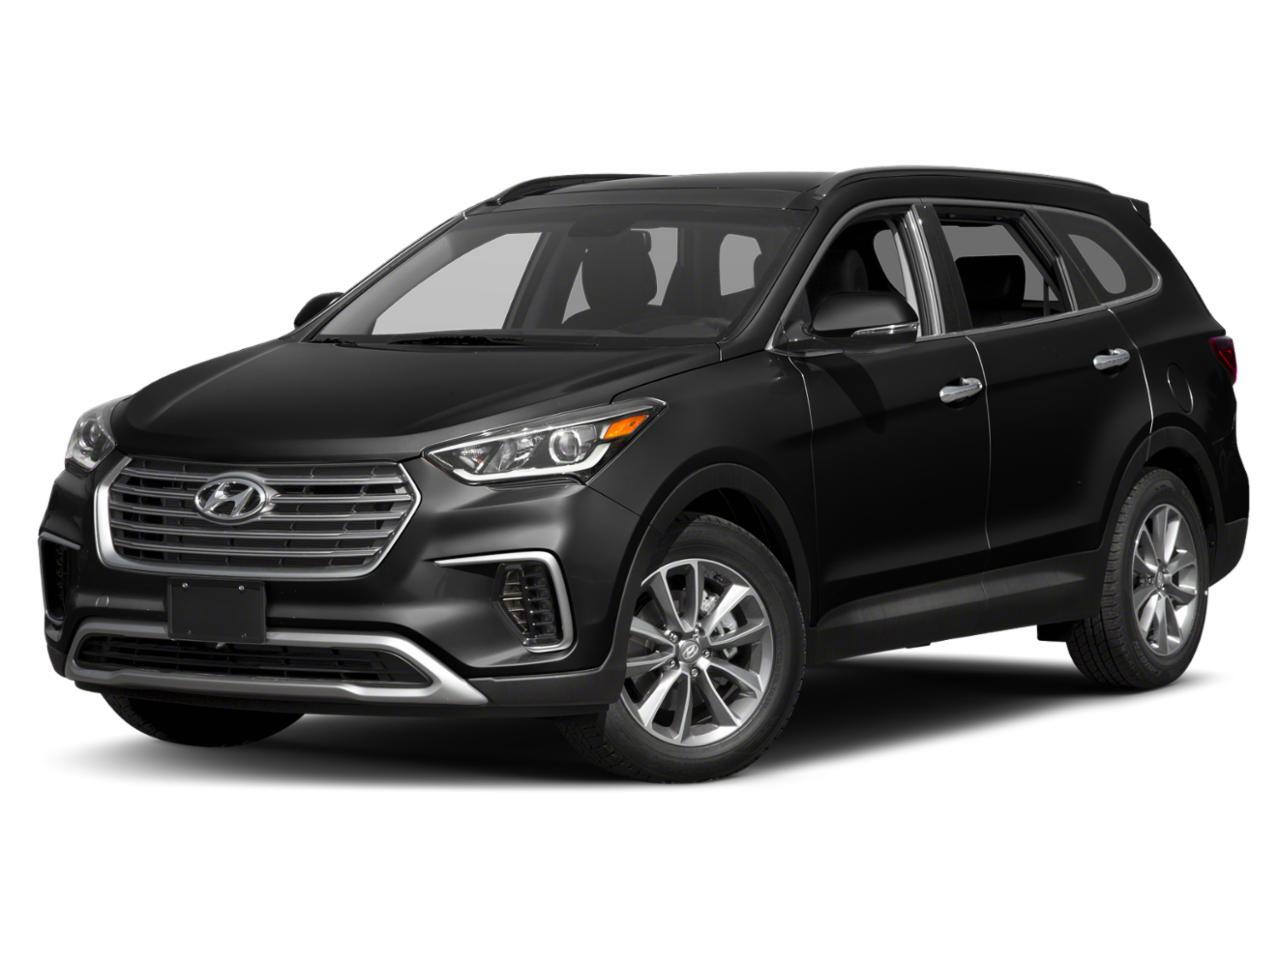 2019 Hyundai Santa Fe XL 3.3L Essential AWD 7 Pass  - $164 B/W